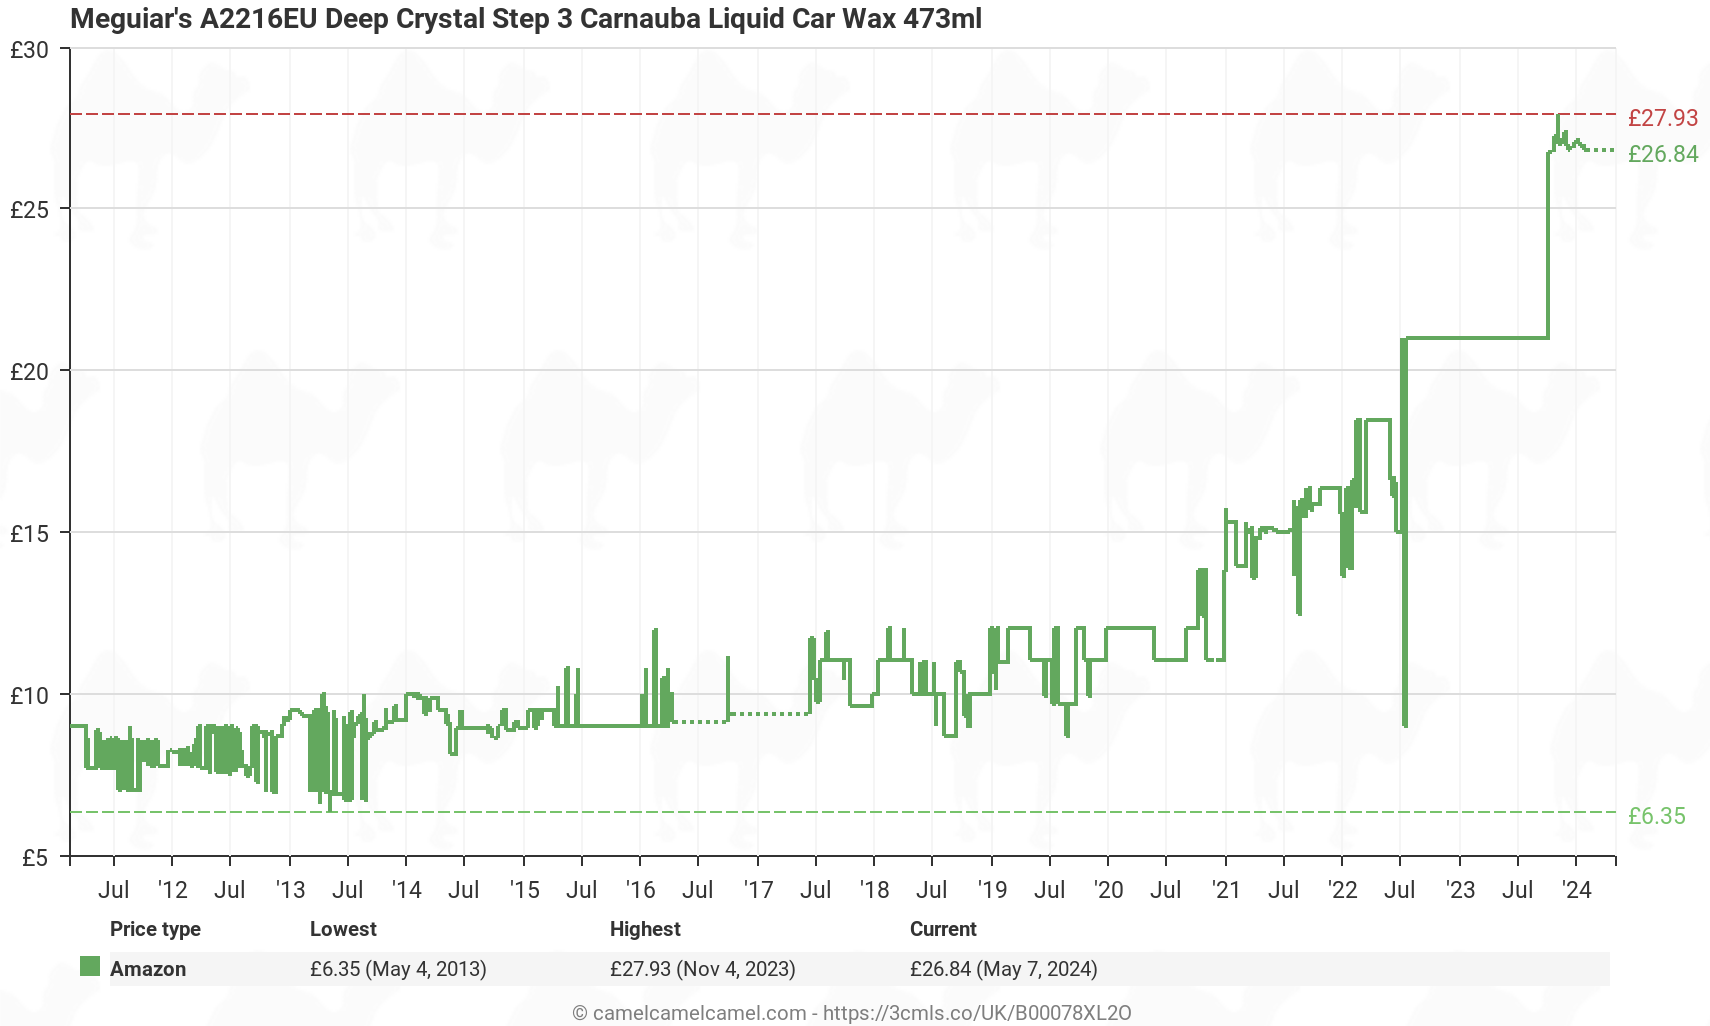 Meguiar's A2216EU Deep Crystal Step 3 Carnauba Liquid Car Wax 473ml - Price History: B00078XL2O